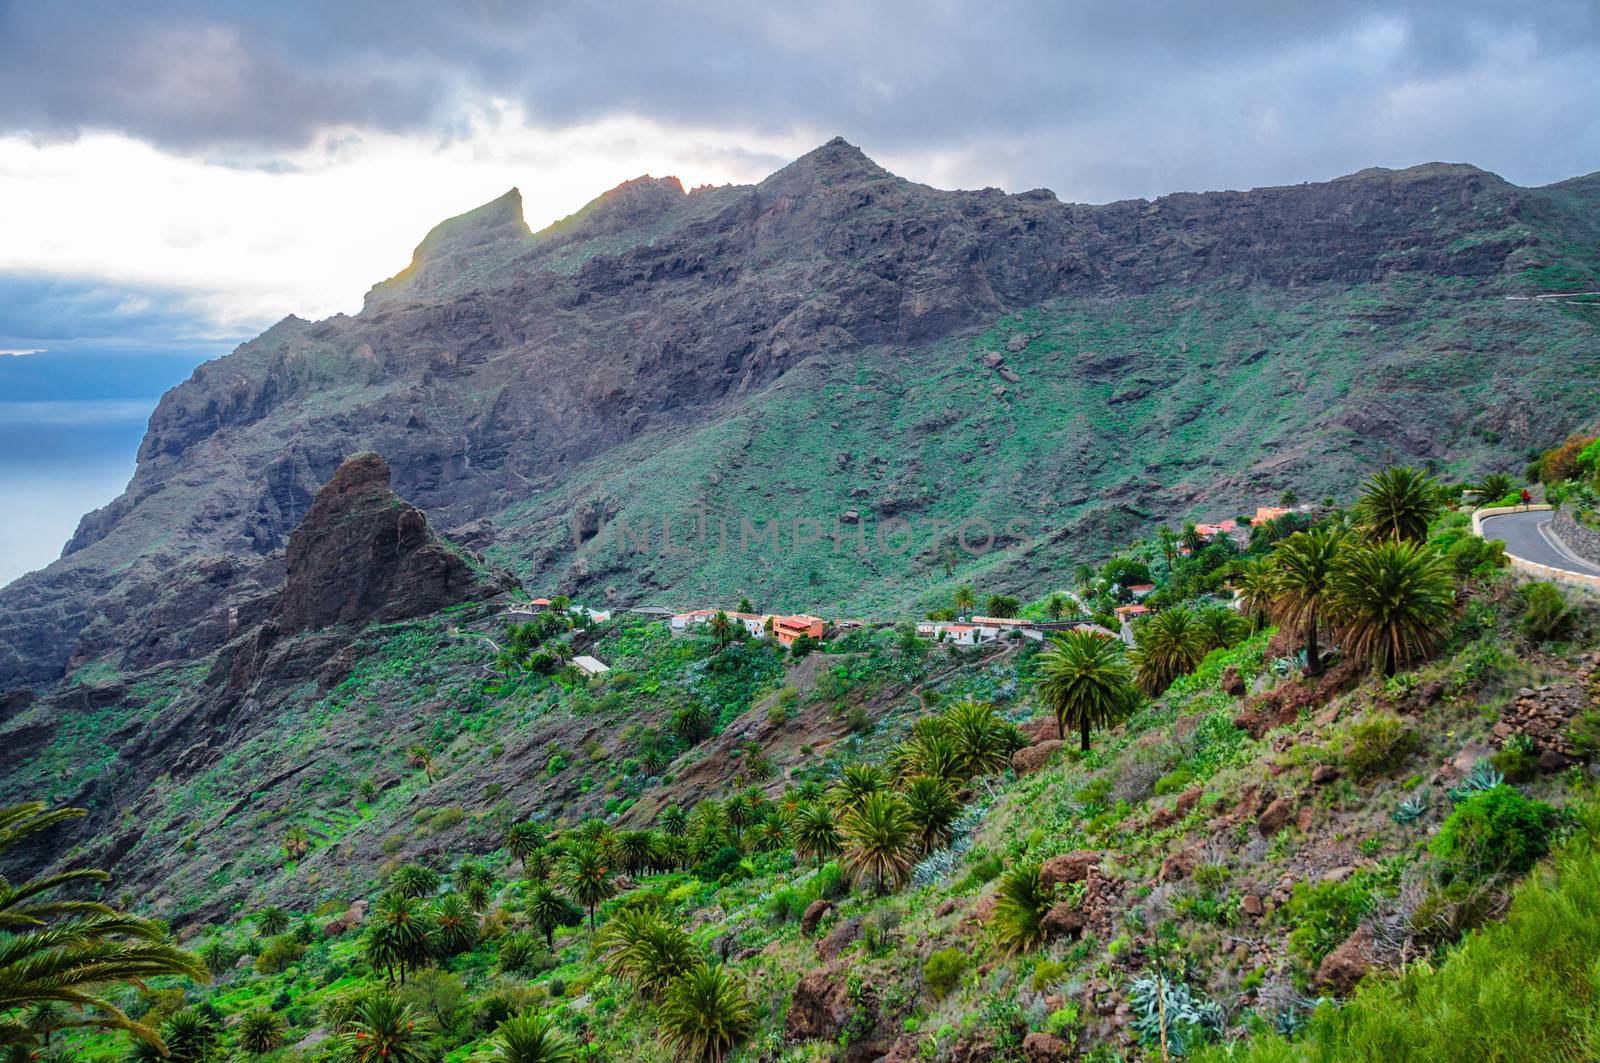 Mountains near Masca village, Tenerife, Canarian Islands by Eagle2308